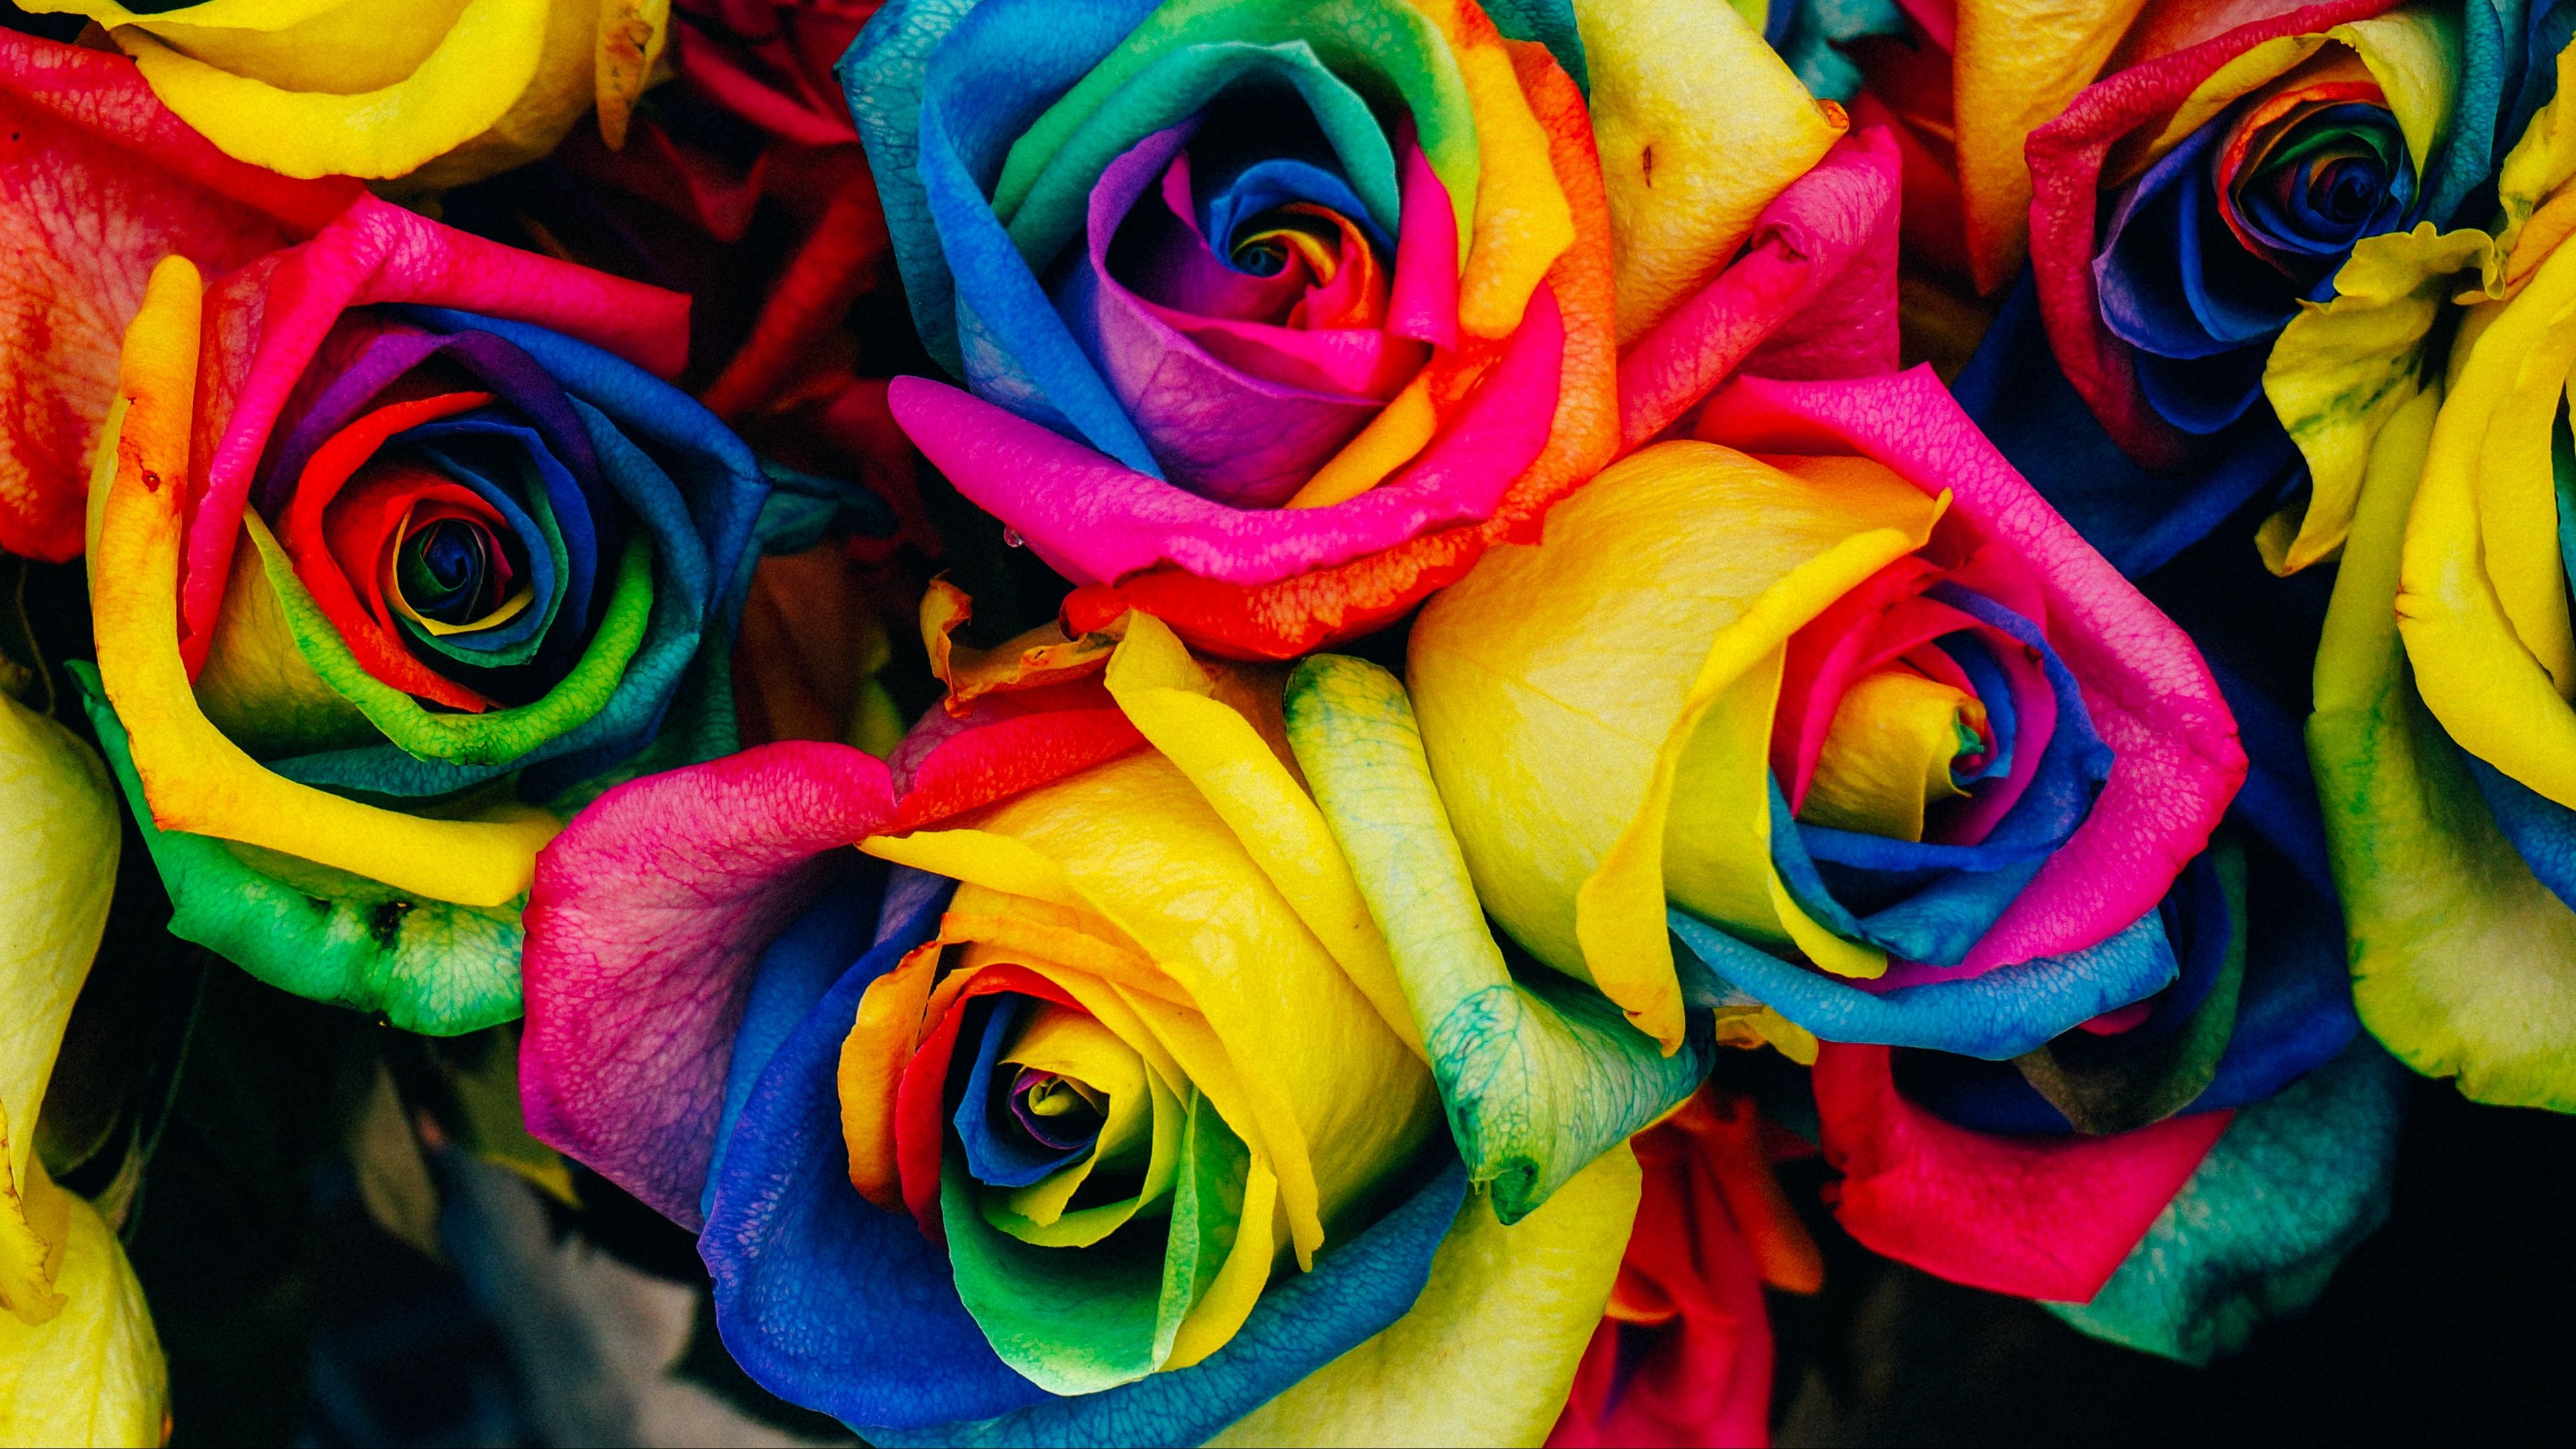 Download wallpaper 3840x2160 roses, colorful, rainbow 4k uhd 16:9